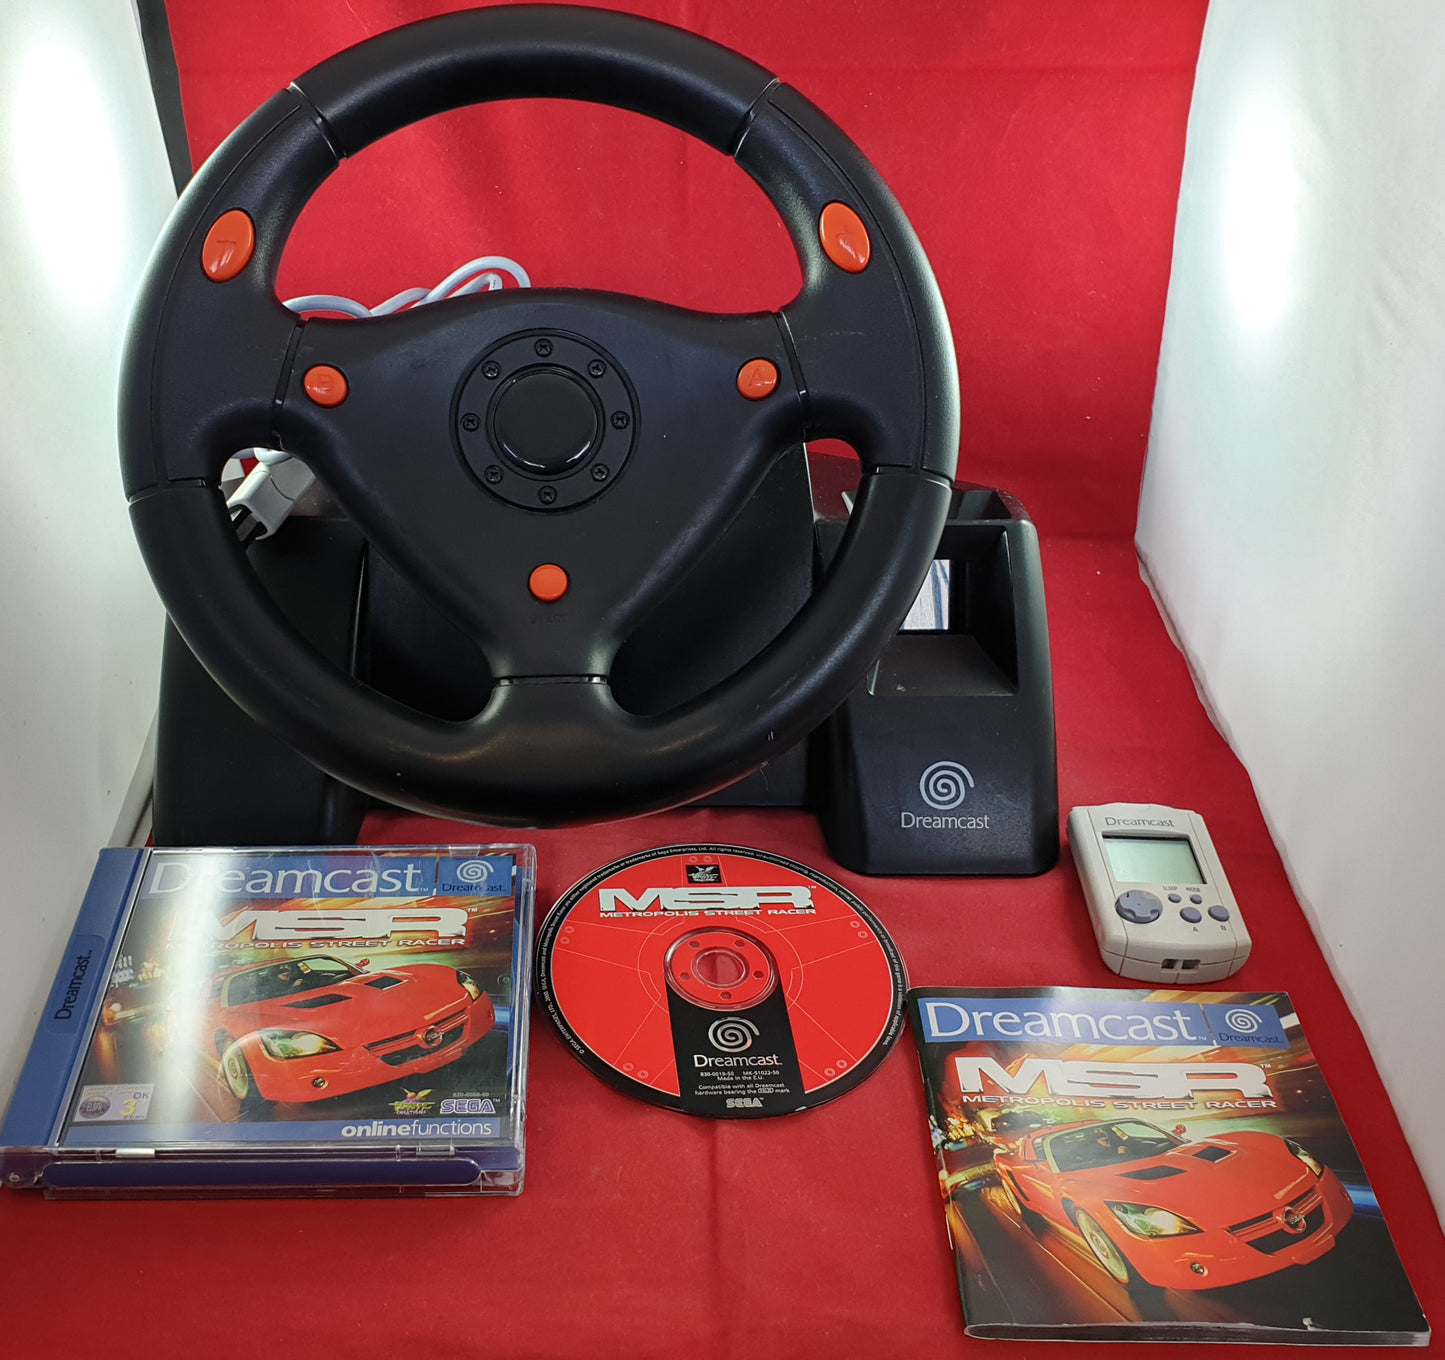 Sega Dreamcast Racing Wheel Accessory with VMU & Metropolis Street Racer